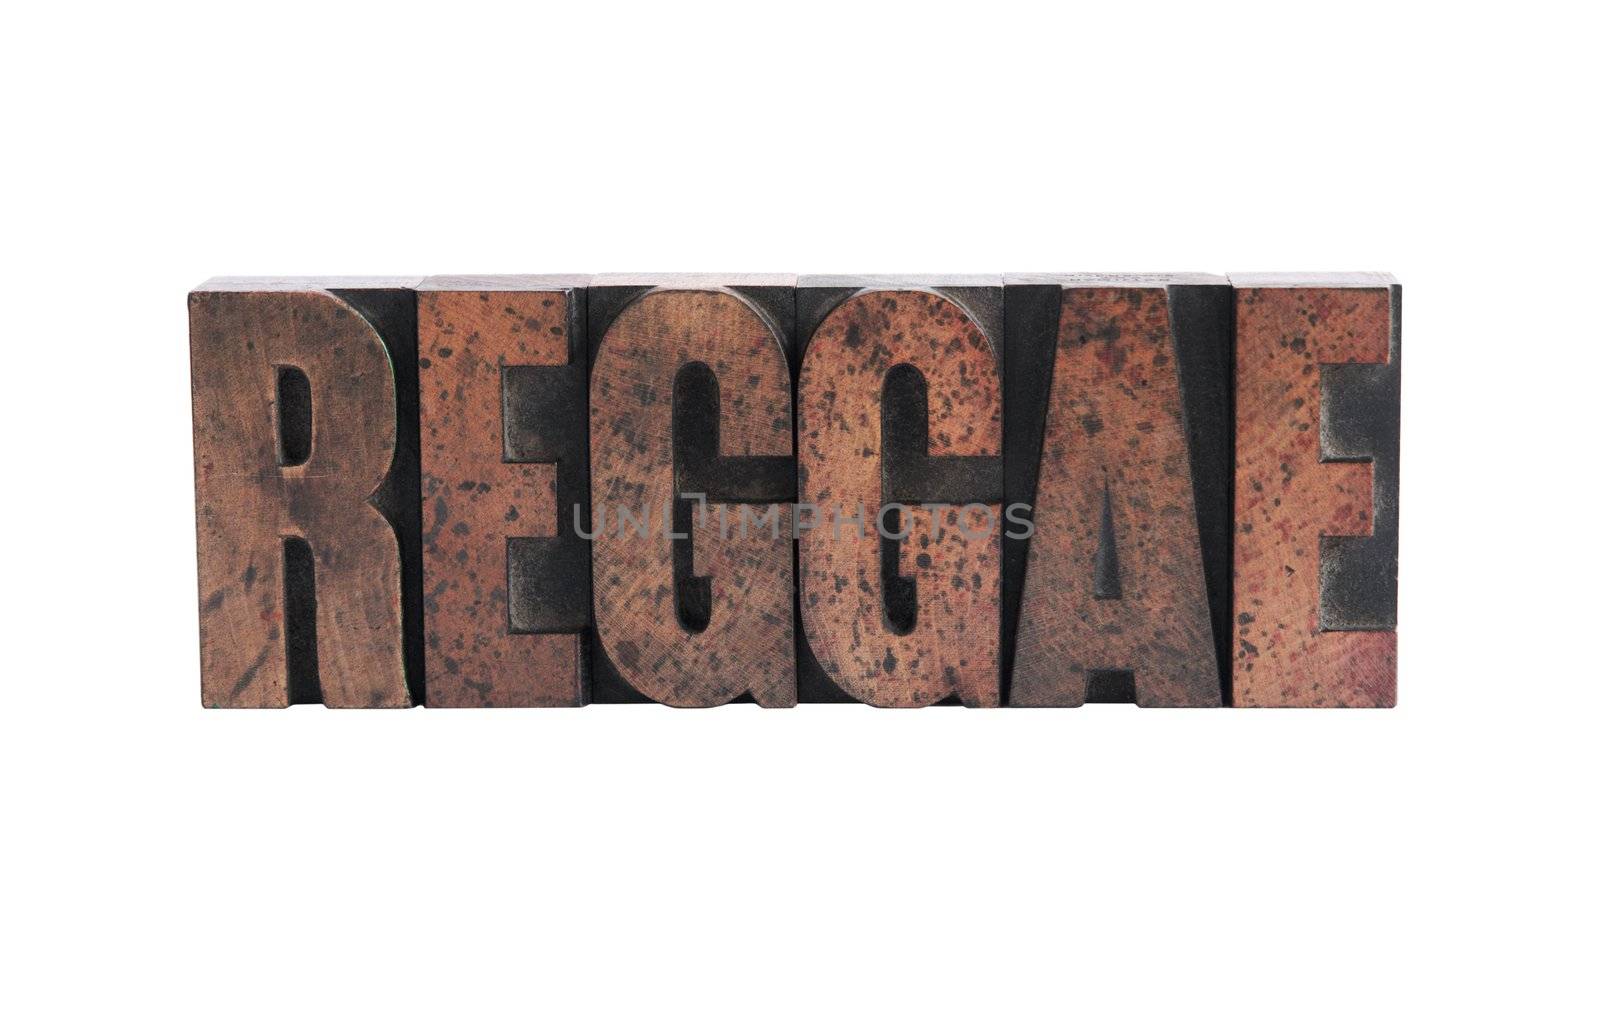 reggae in letterpress wood type by nebari